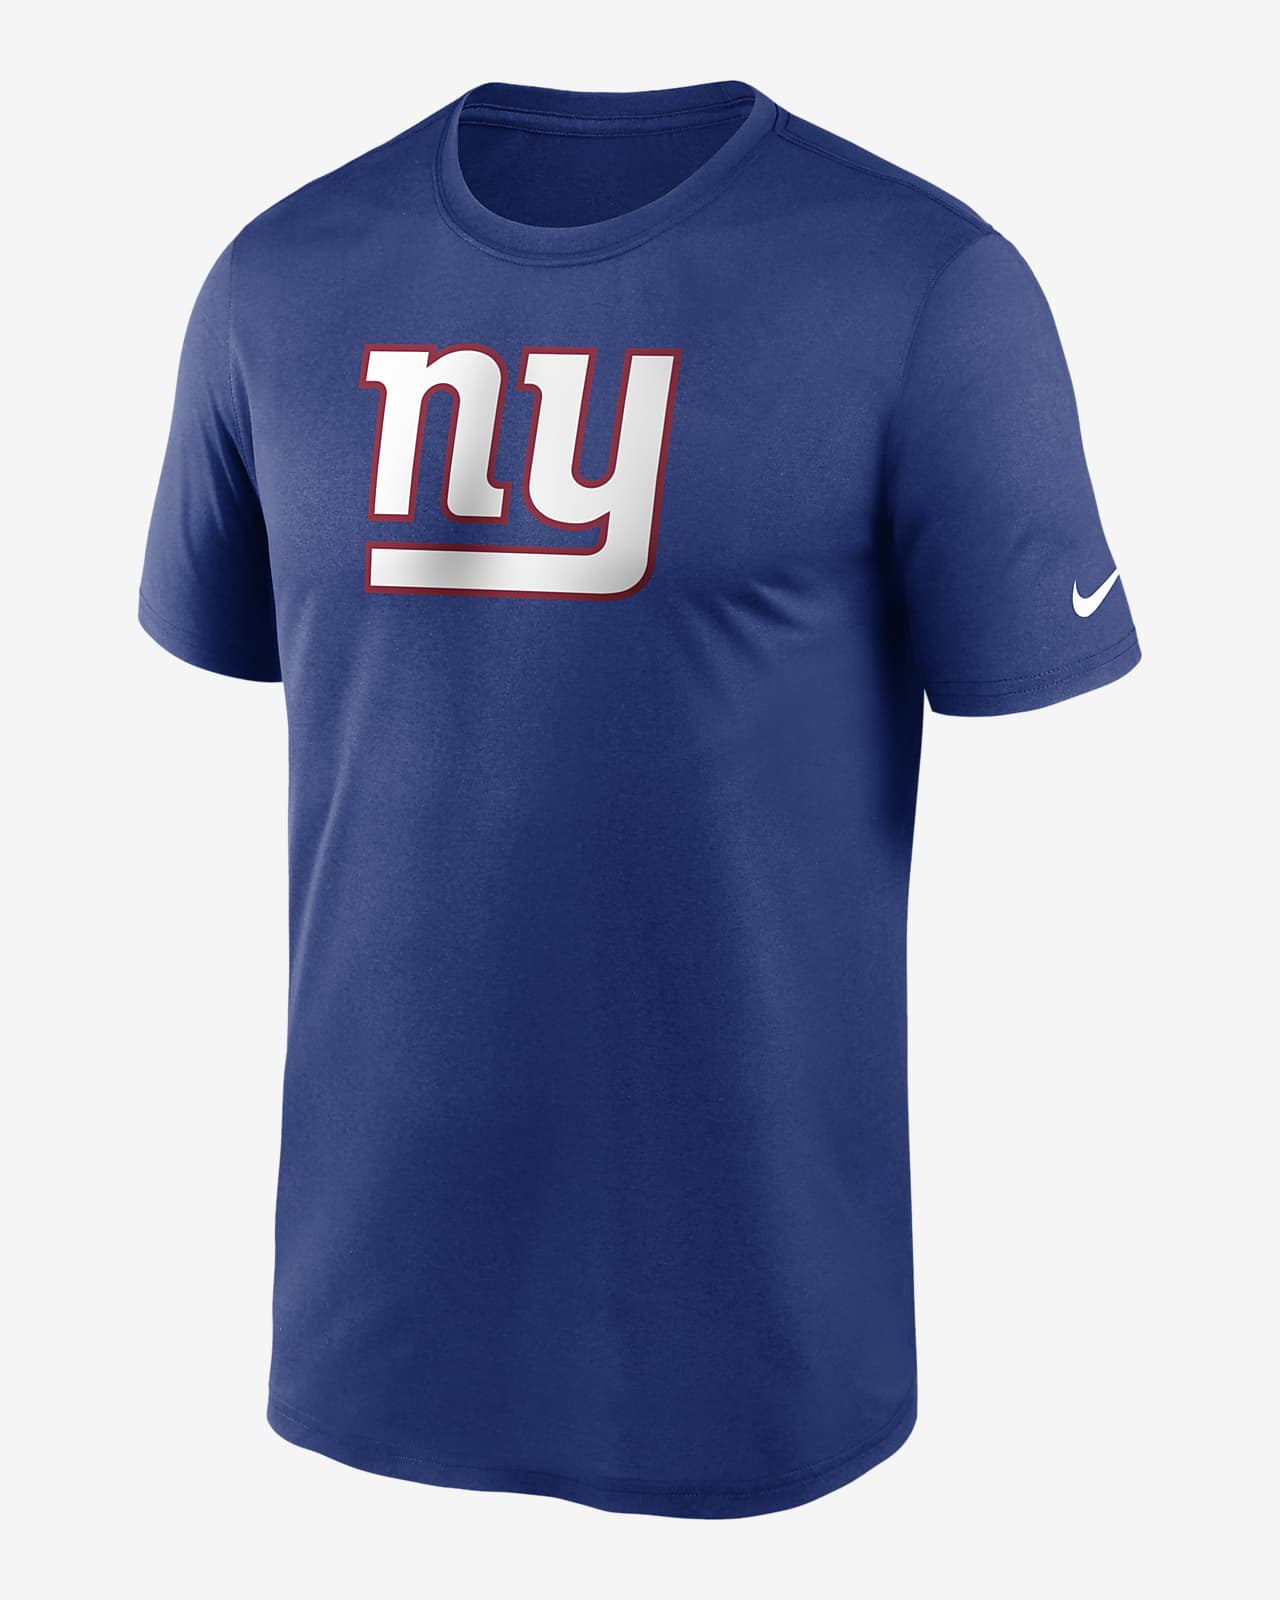 Playera para hombre Nike Dri-FIT Logo Legend (NFL New York Giants)